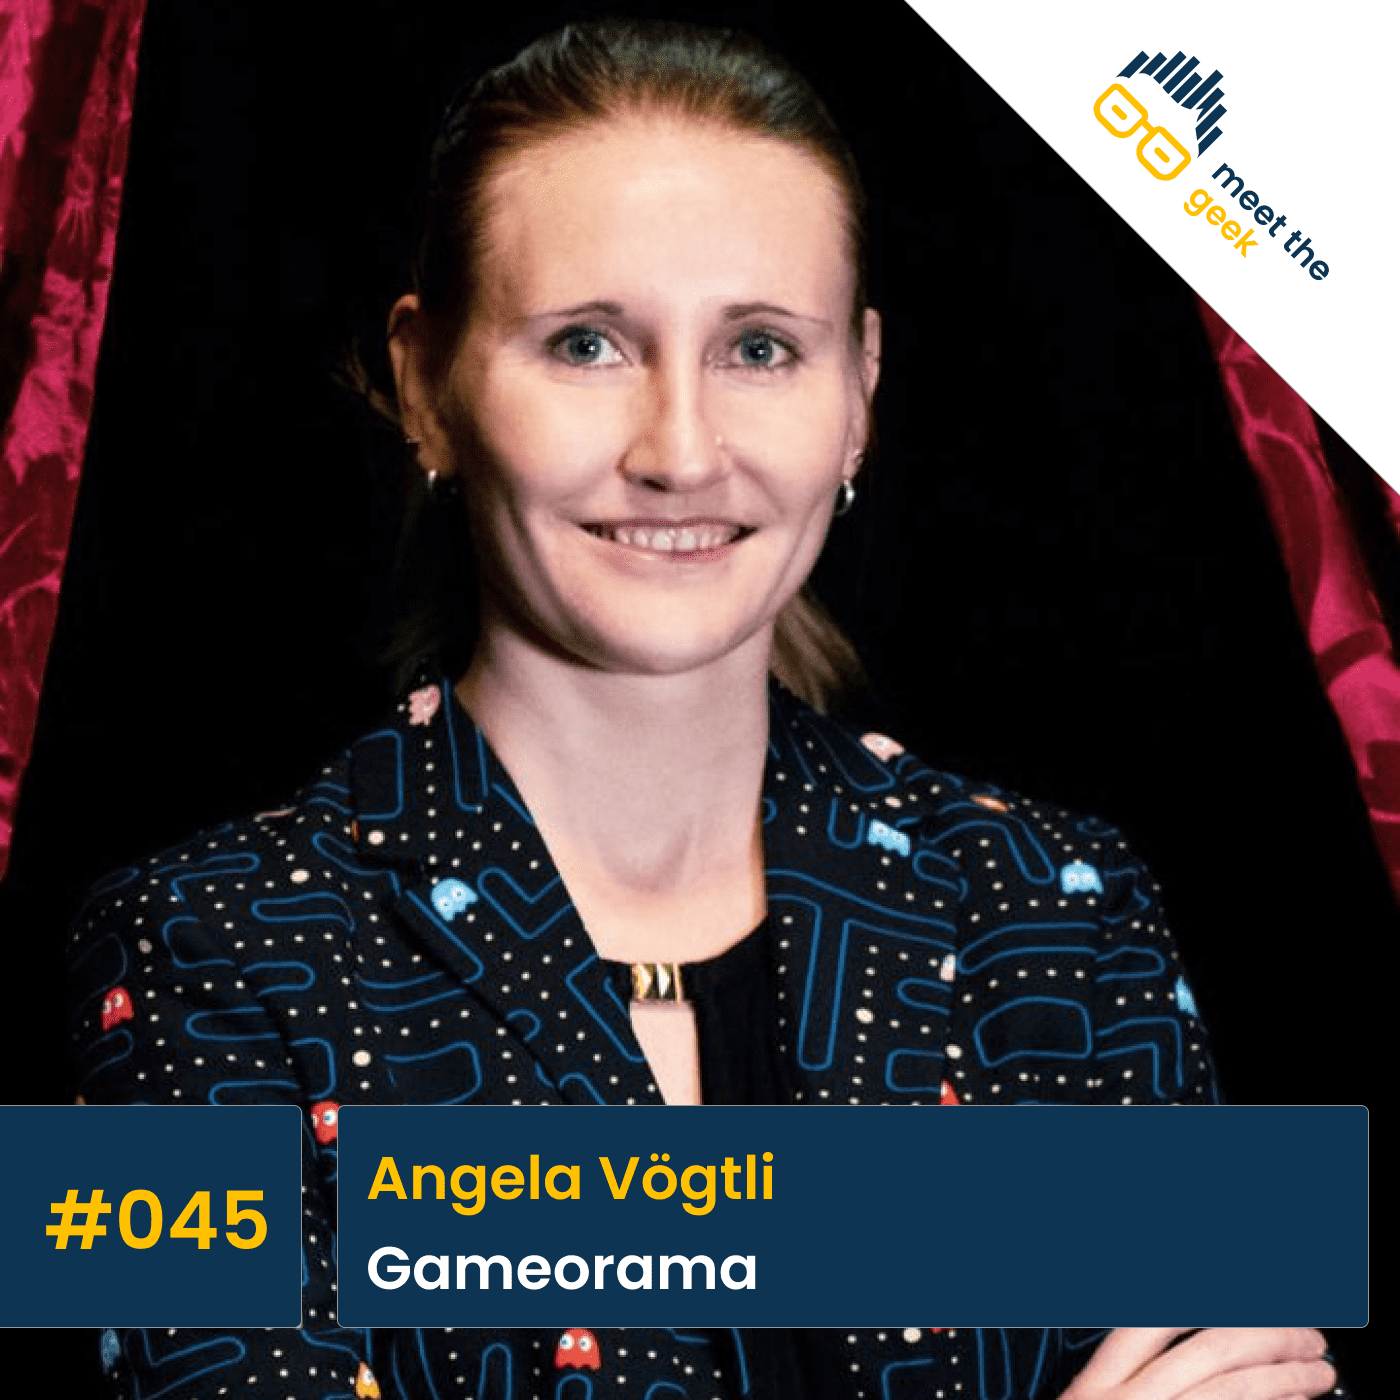 #045 Angela Vögtli, Gameorama